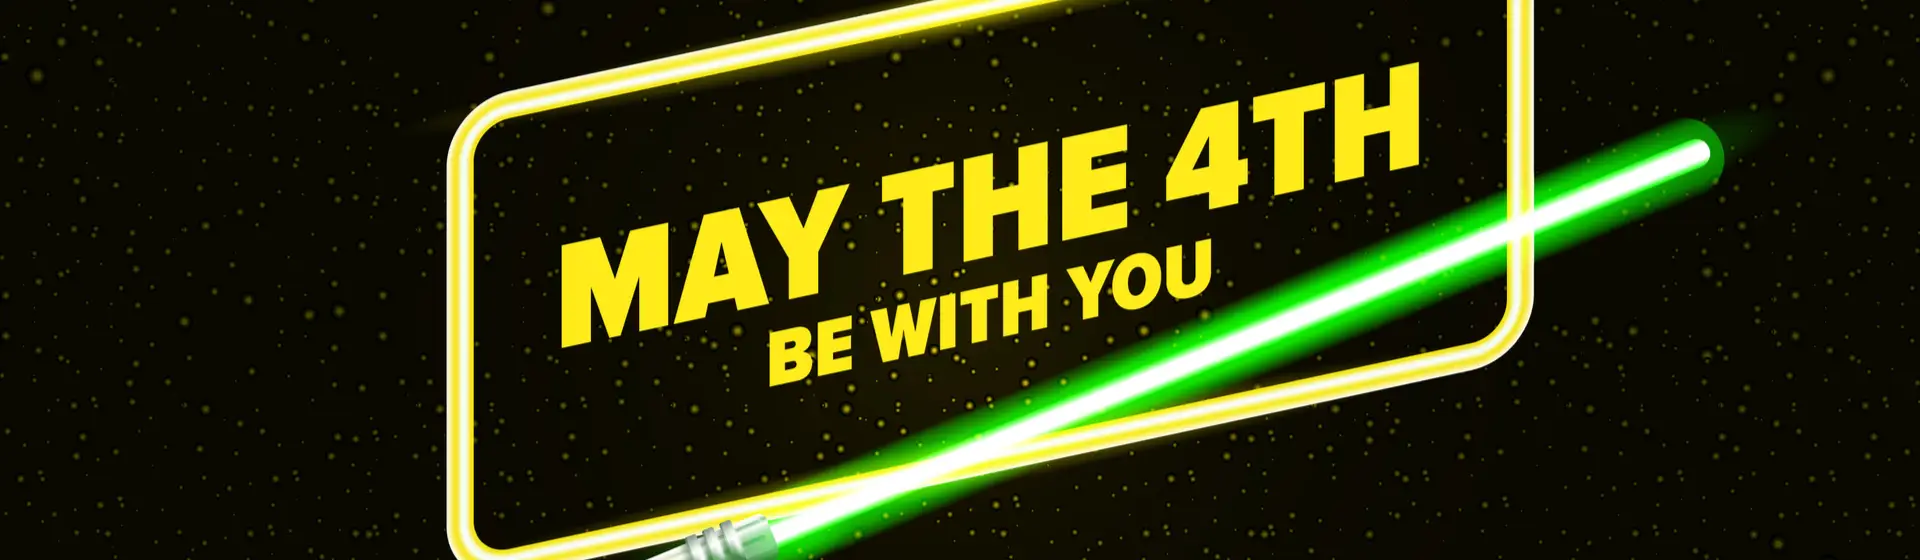 Star Wars Day: entenda a data e veja dicas para celebrar a saga